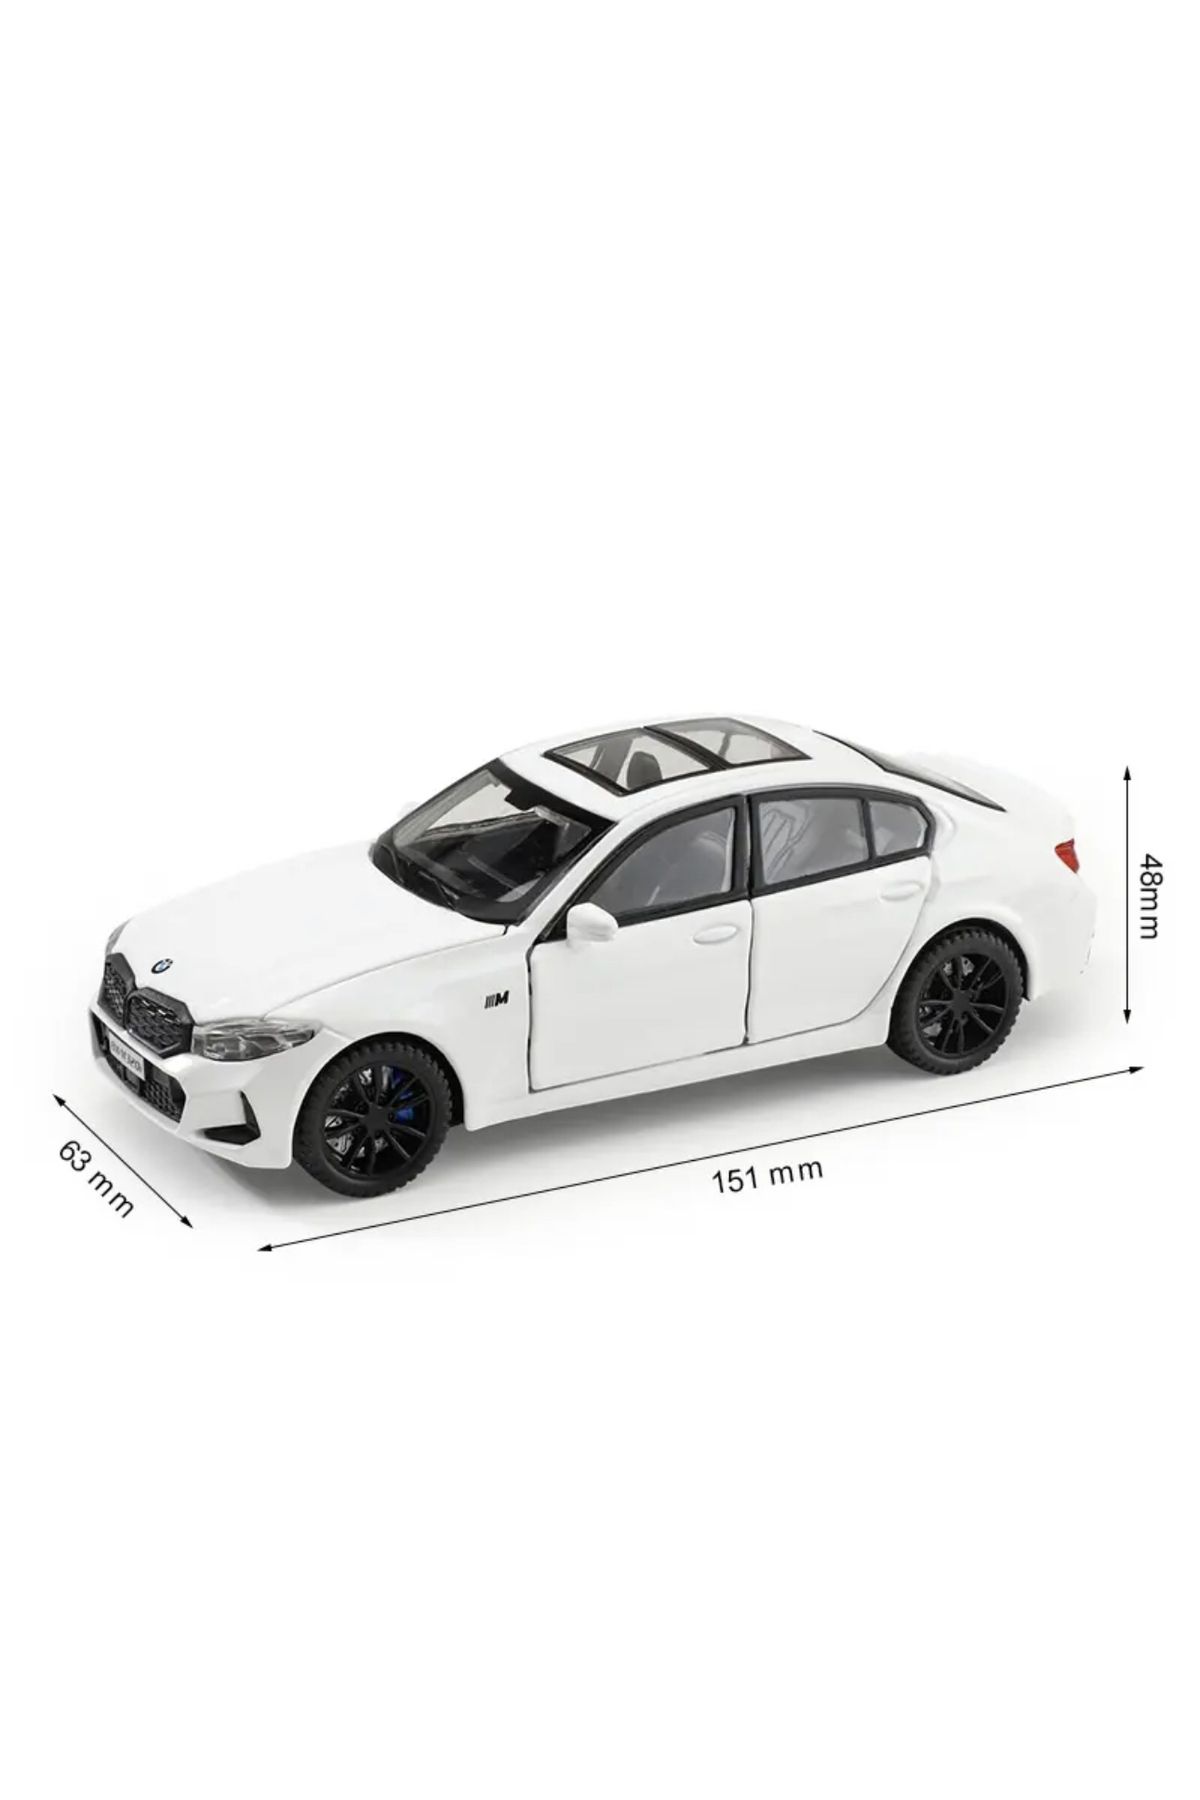 CarStore BMW 3.20 M 1:32 MODEL MAKET ARABA BEYAZ